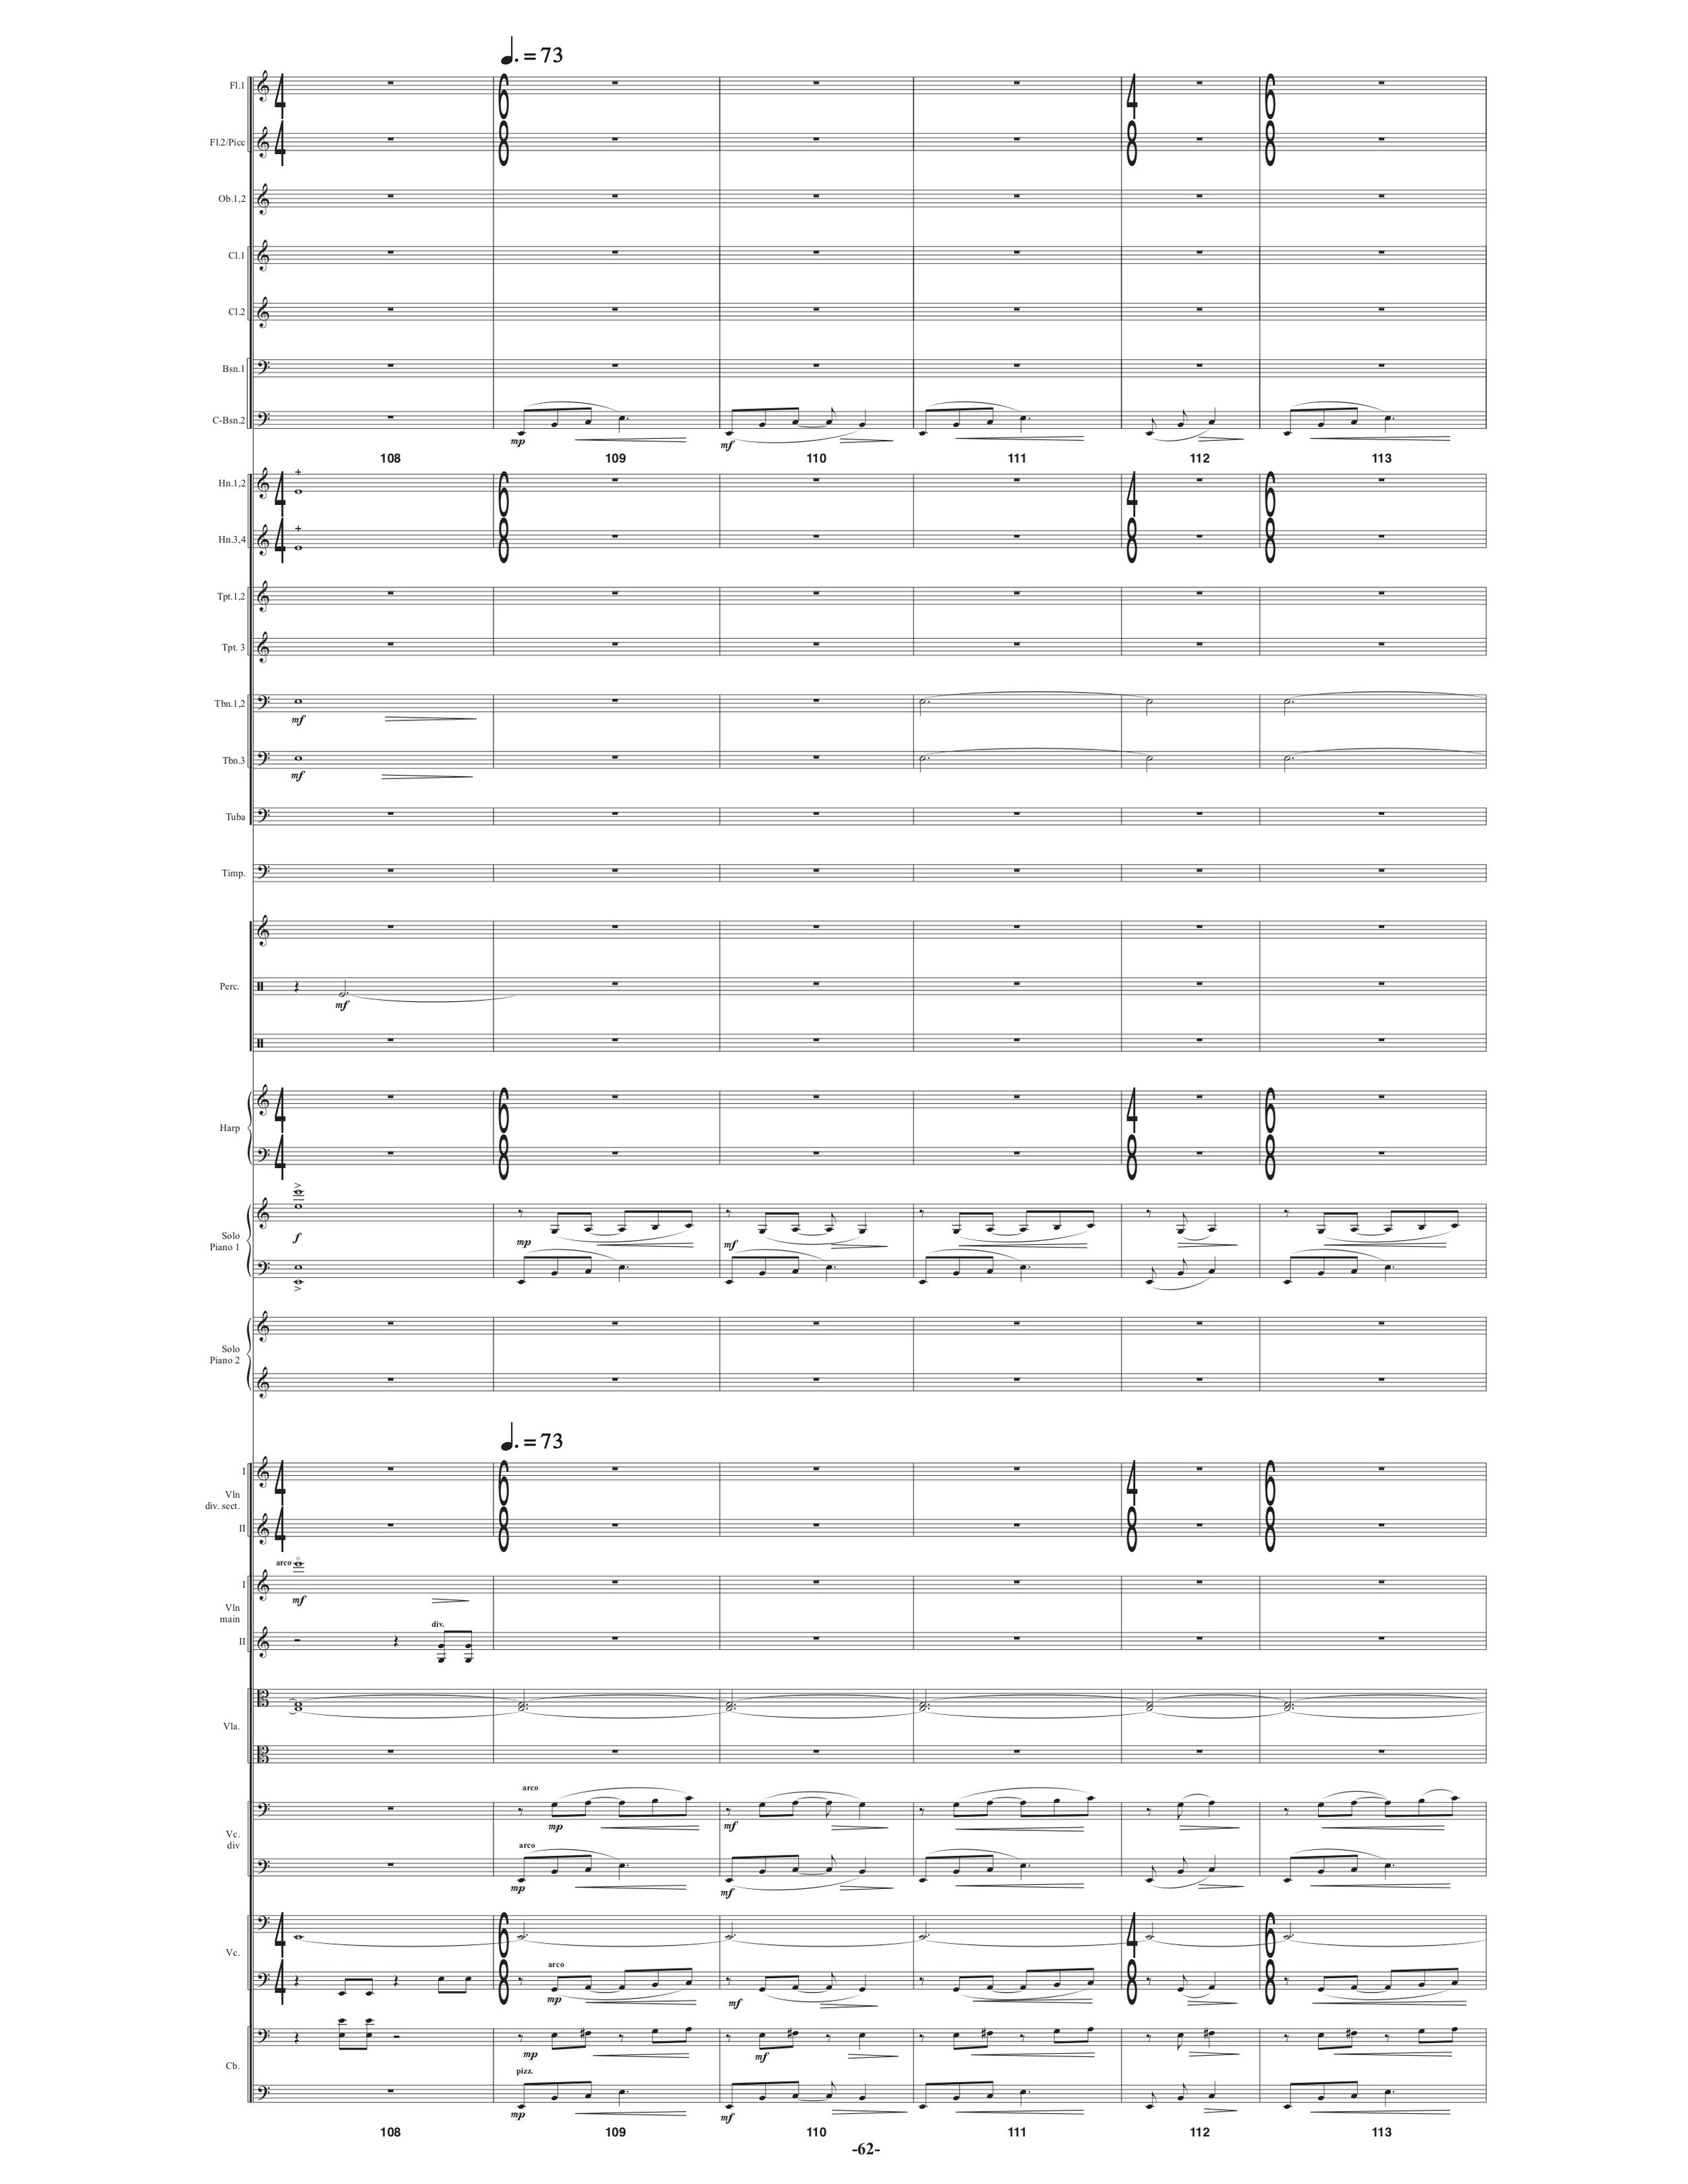 Symphony_Orch & 2 Pianos p67.jpg